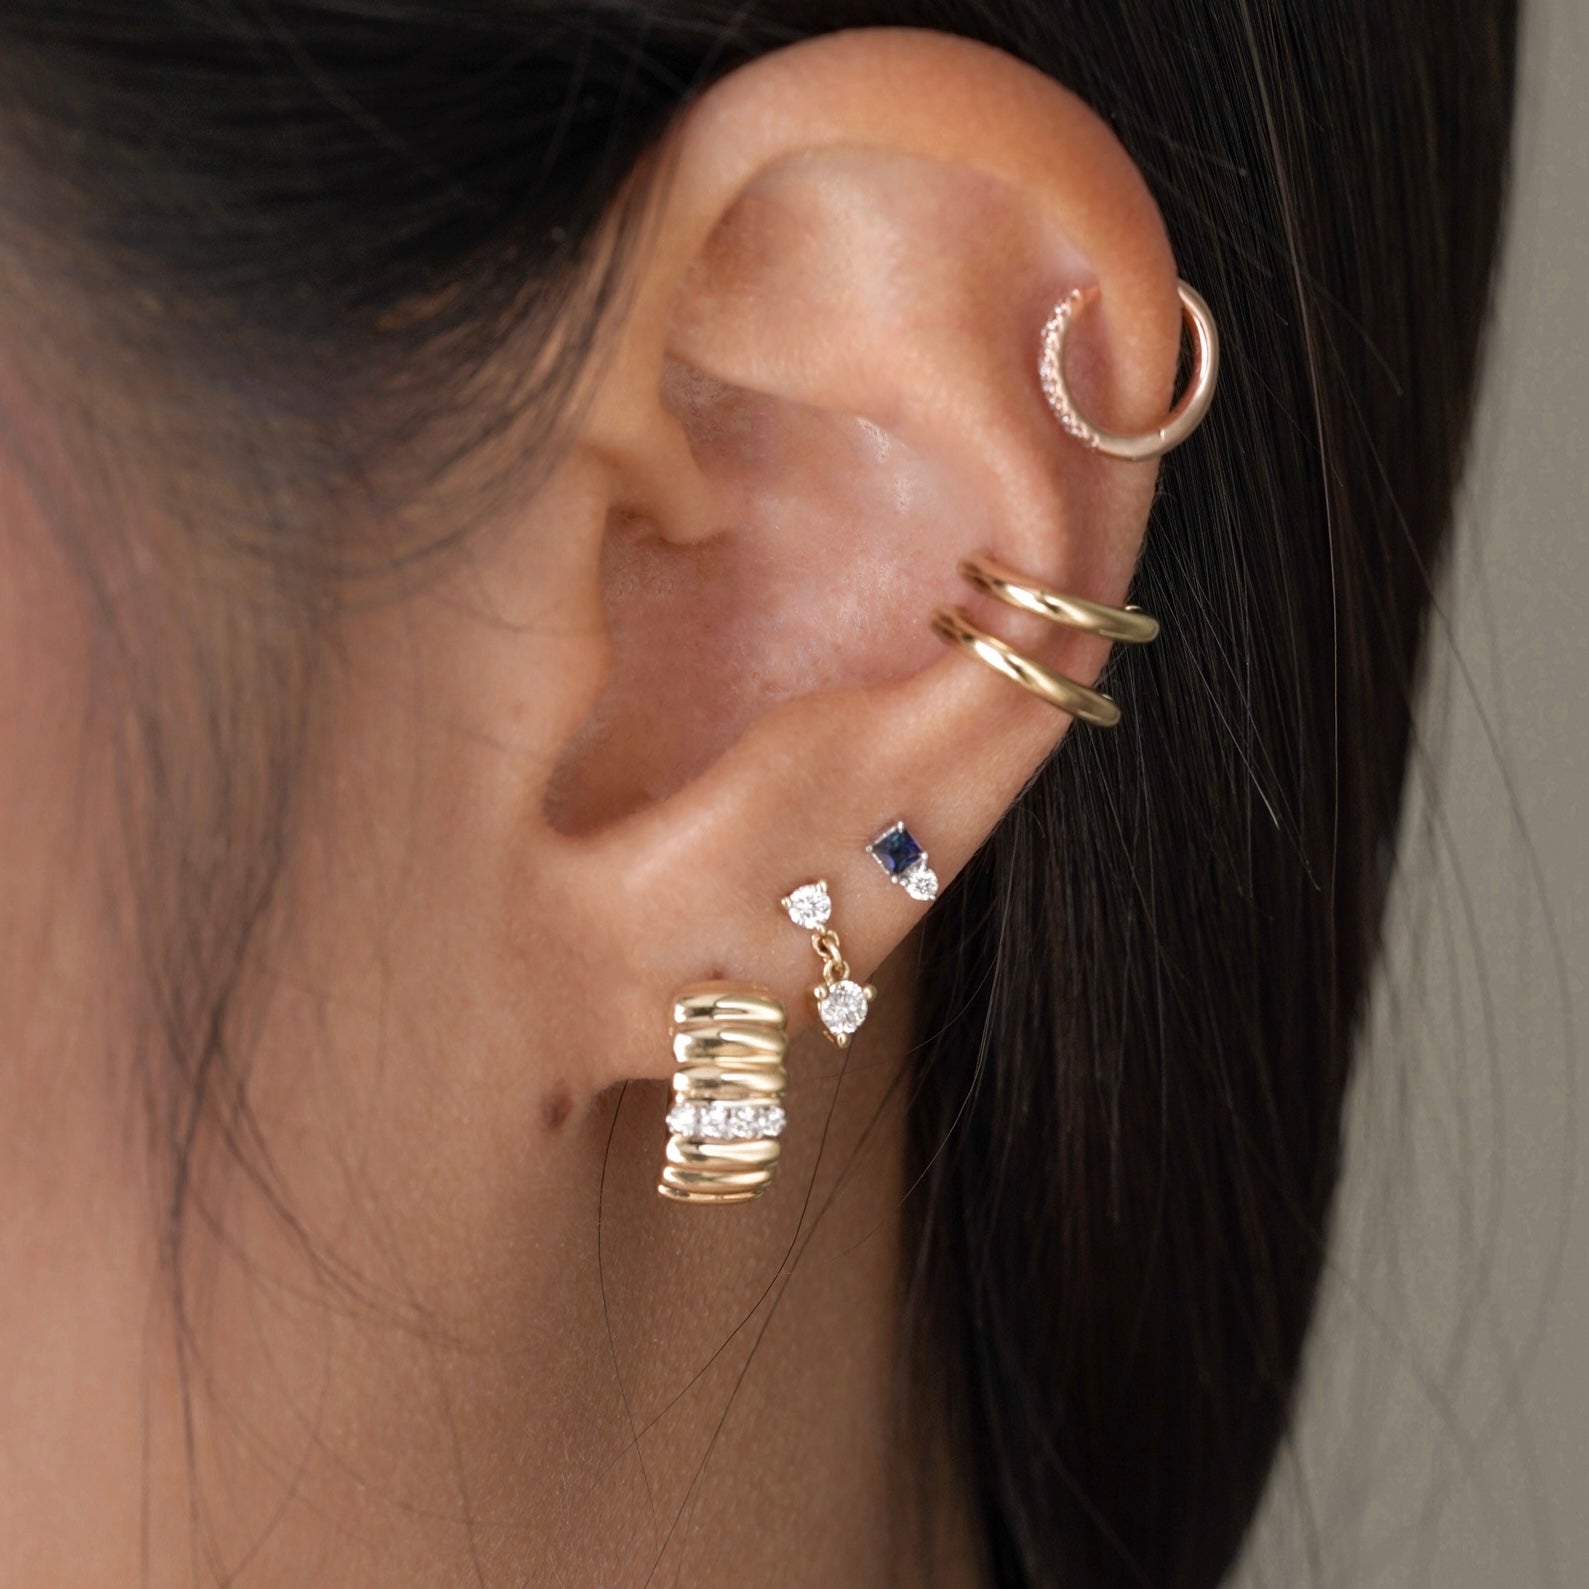 10mm Gold Cuff Earring